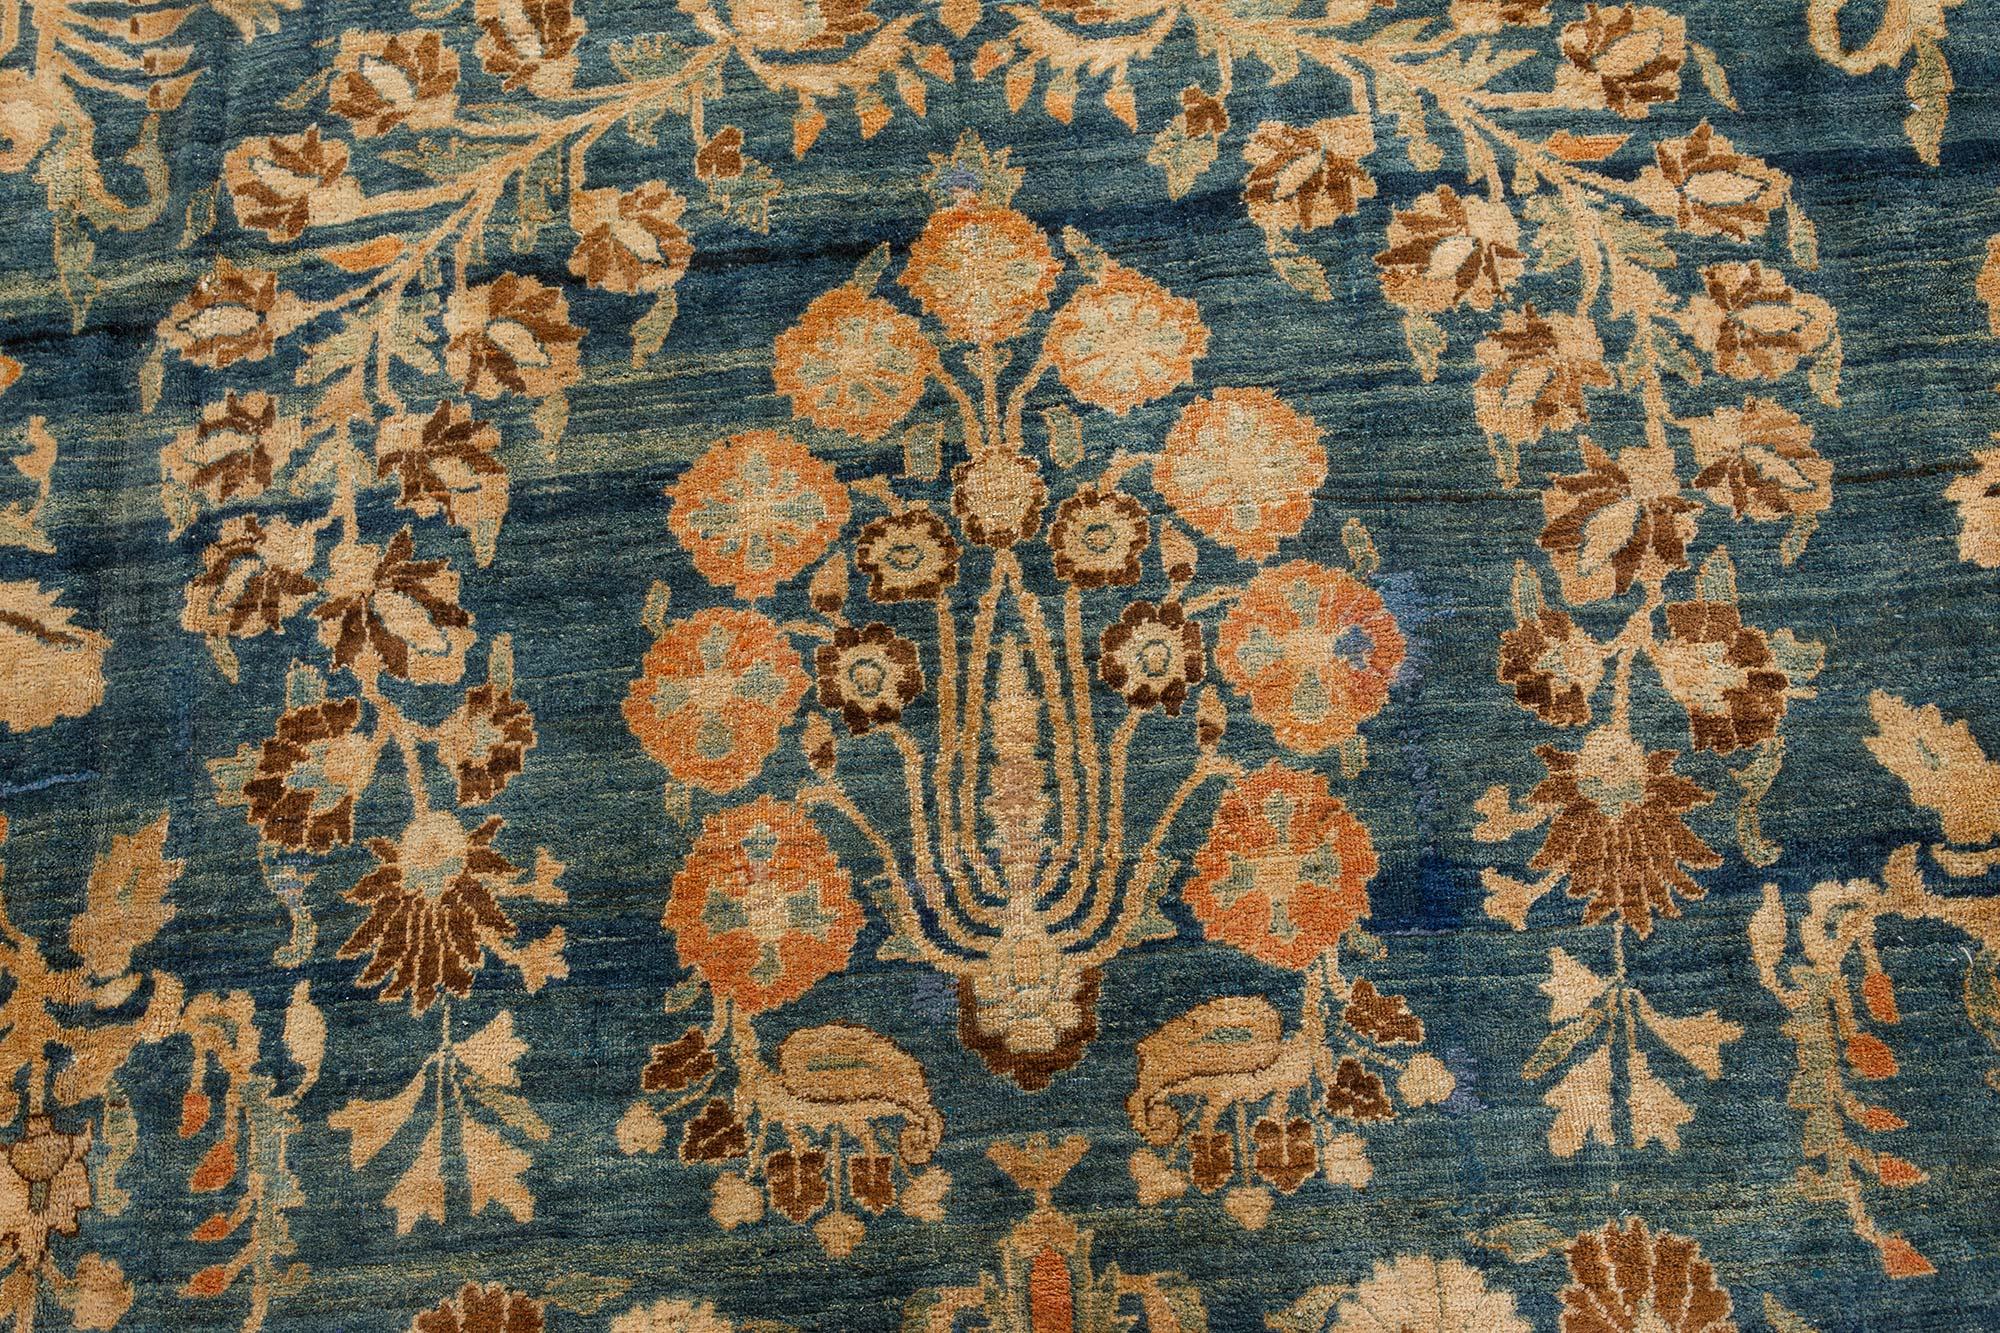 Authentic Persian Khorassan Blue Handmade Wool Carpet
Size: 11'10